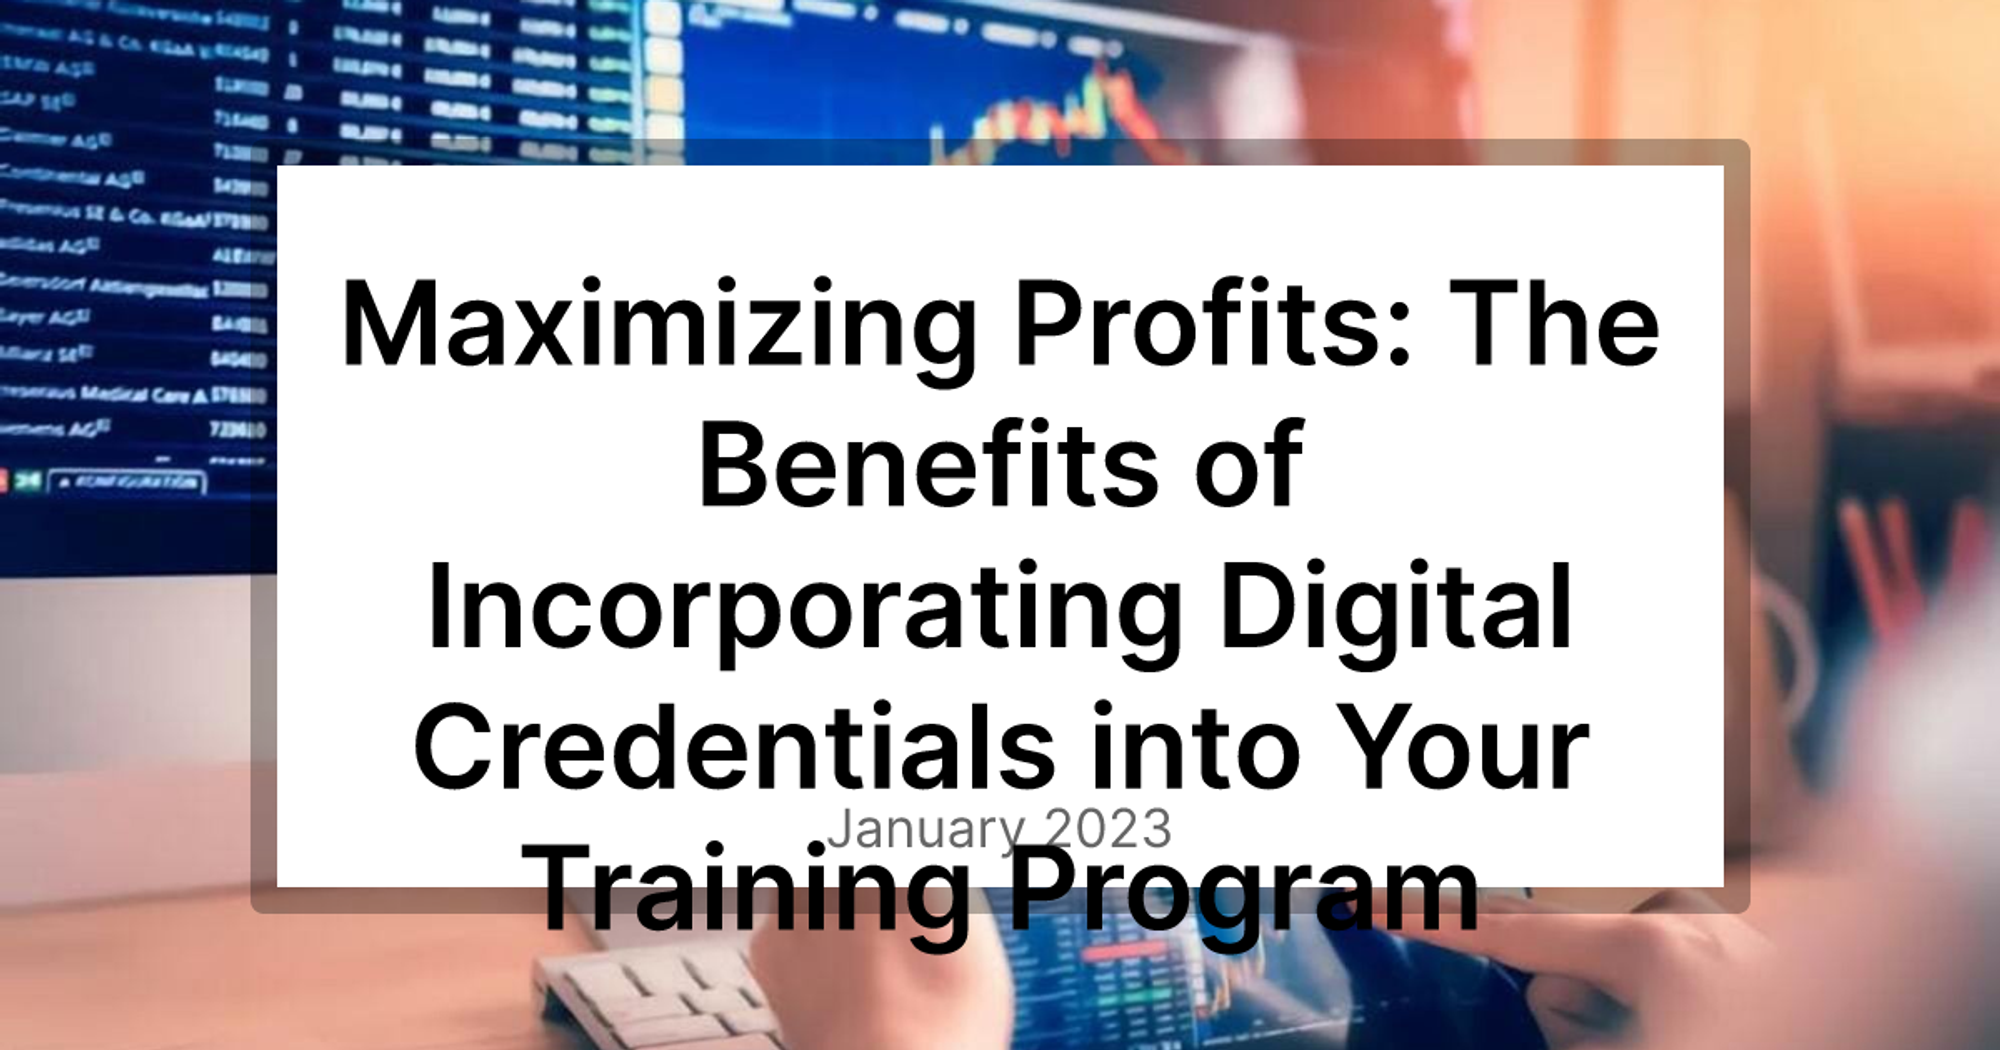 Maximizing Profits: The Benefits of Incorporating Digital Credentials into Your Training Program